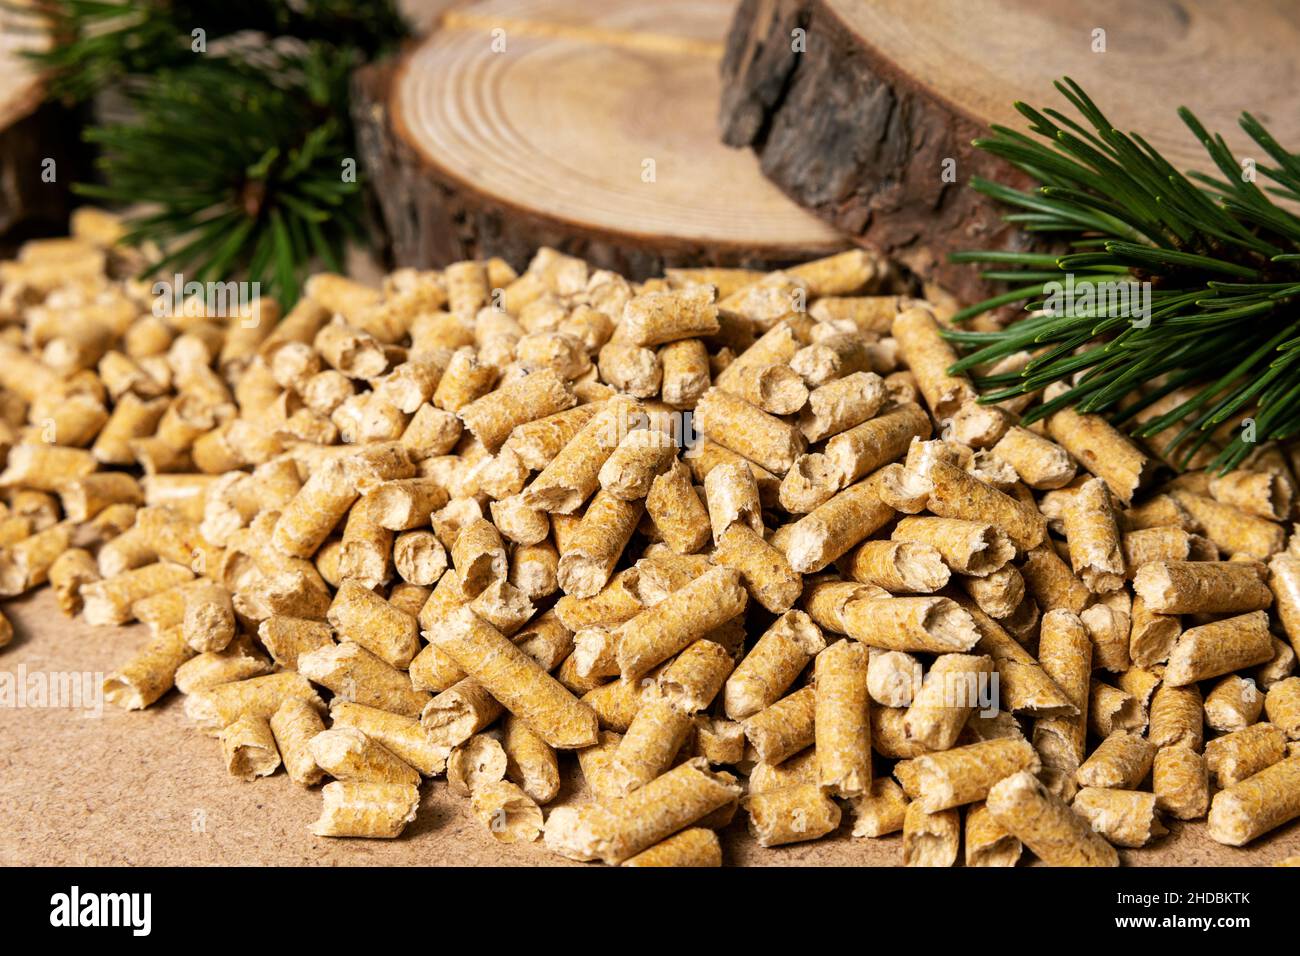 pine wood pellets. renewable sustainable energy. biomass Stock Photo